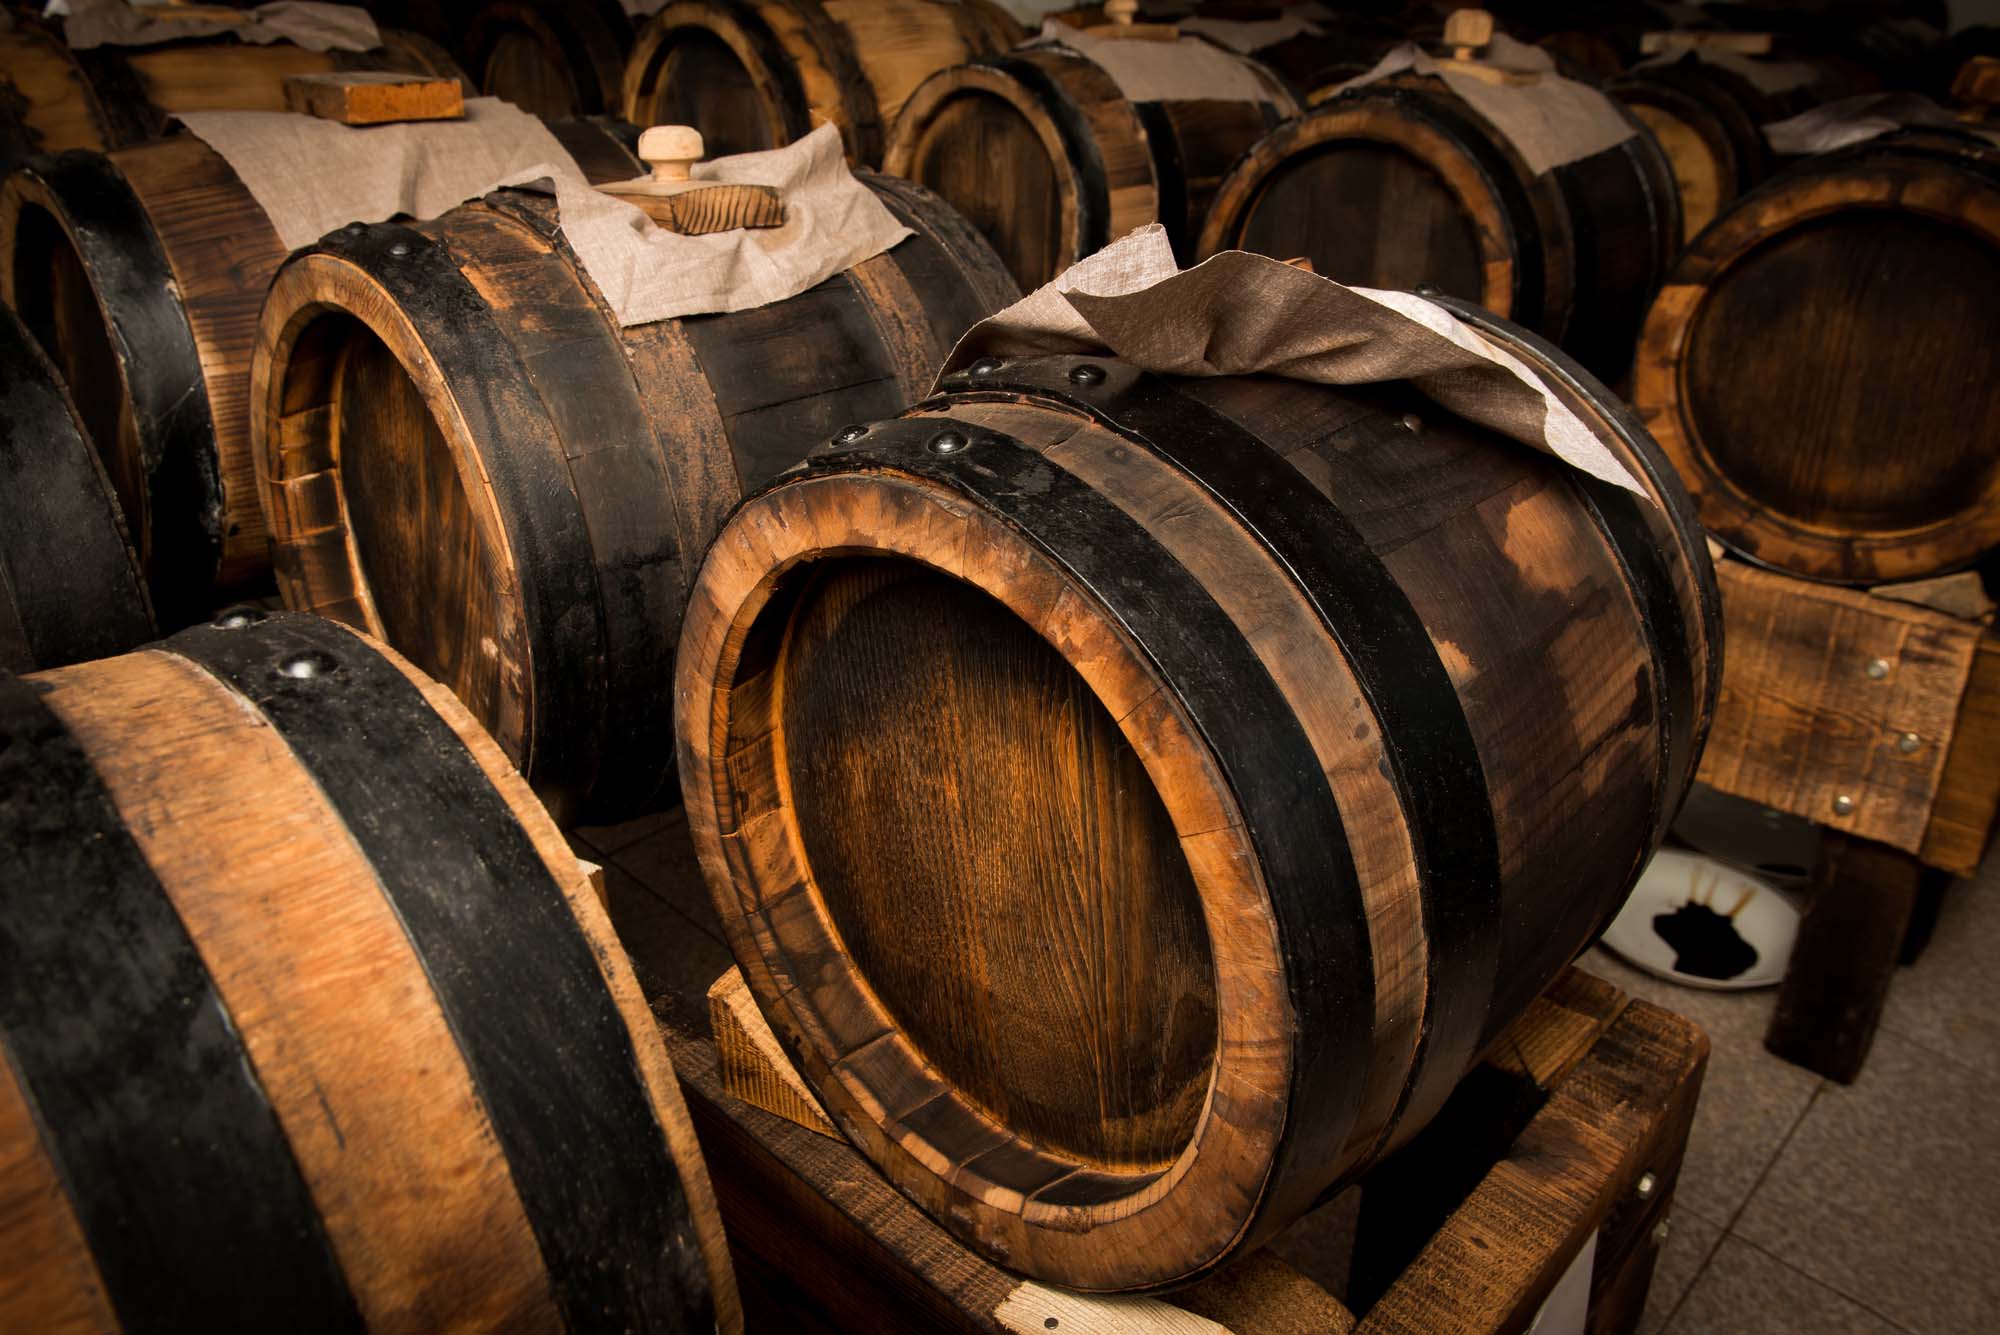 Balsamic vinegar barrels for storing and aging. 